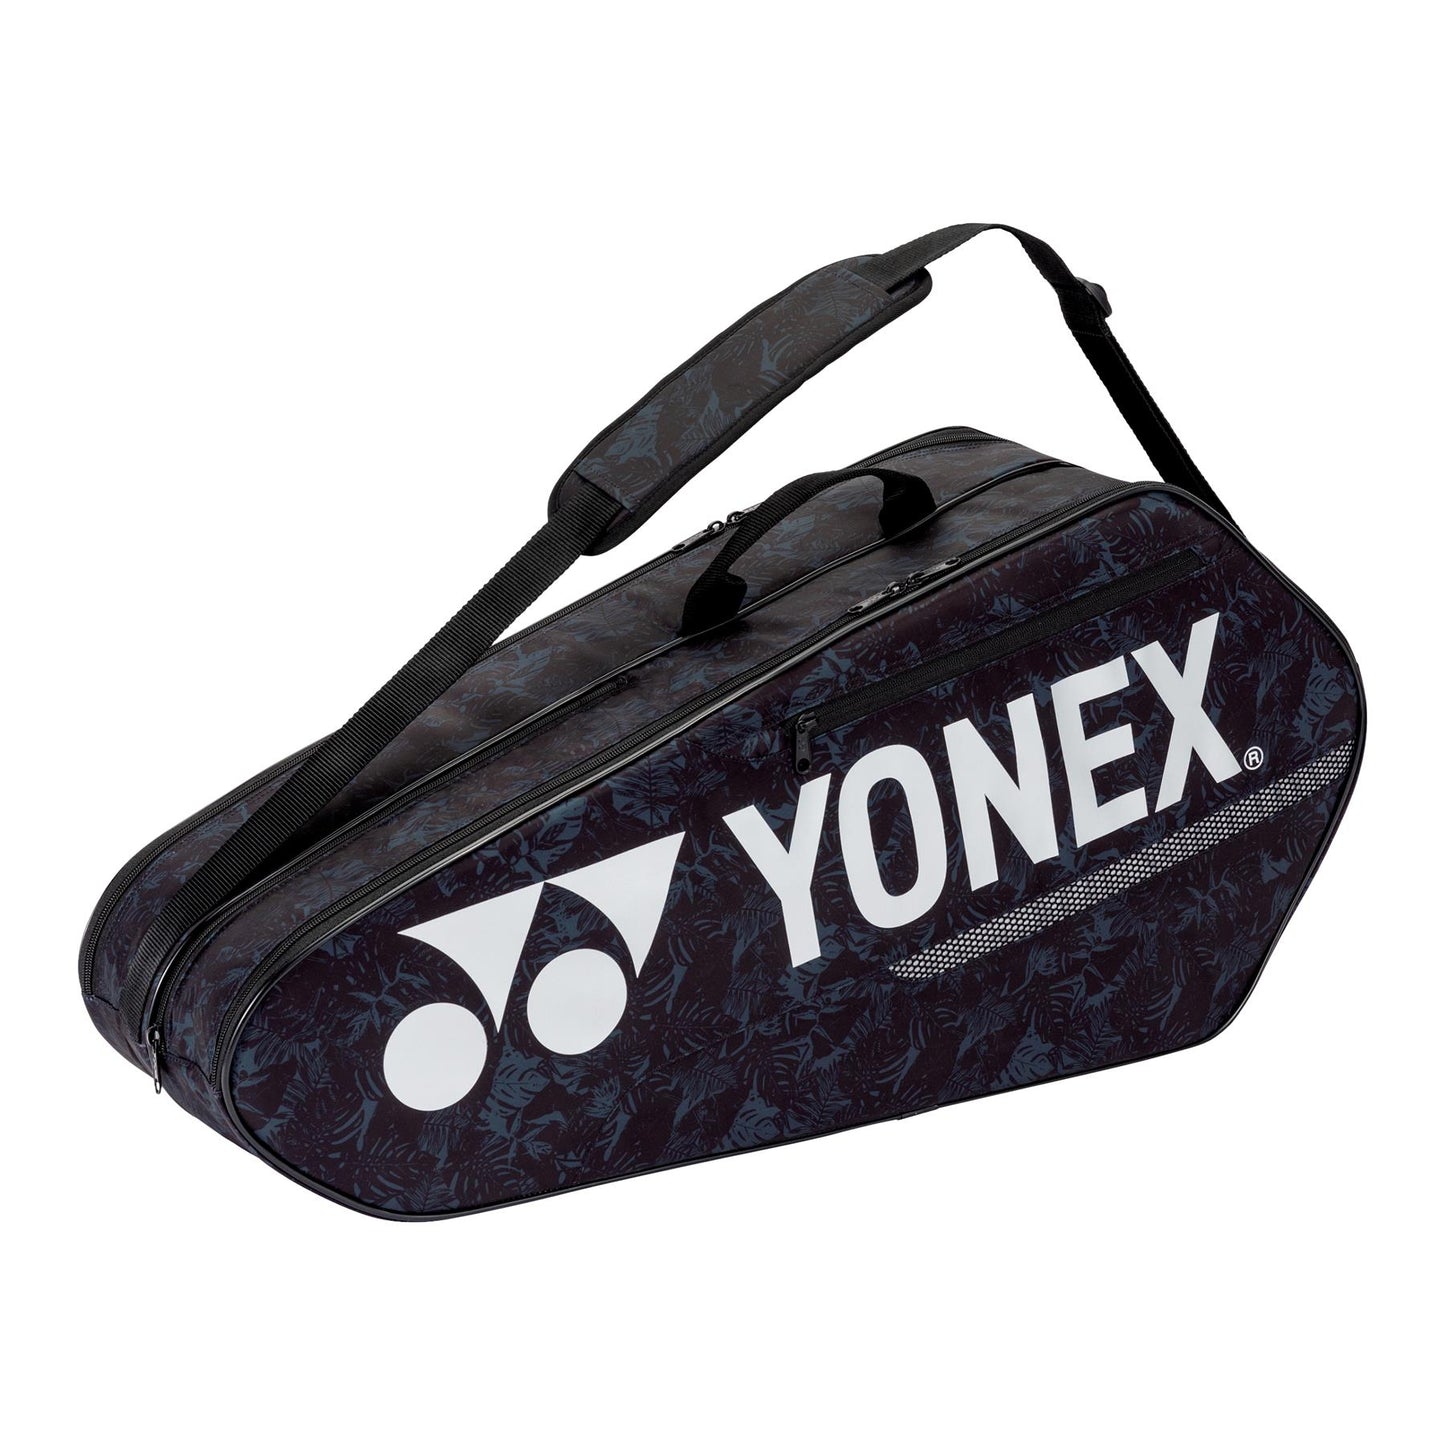 Yonex 6 Piece Team Racket Bag 42126 - Black / Silver